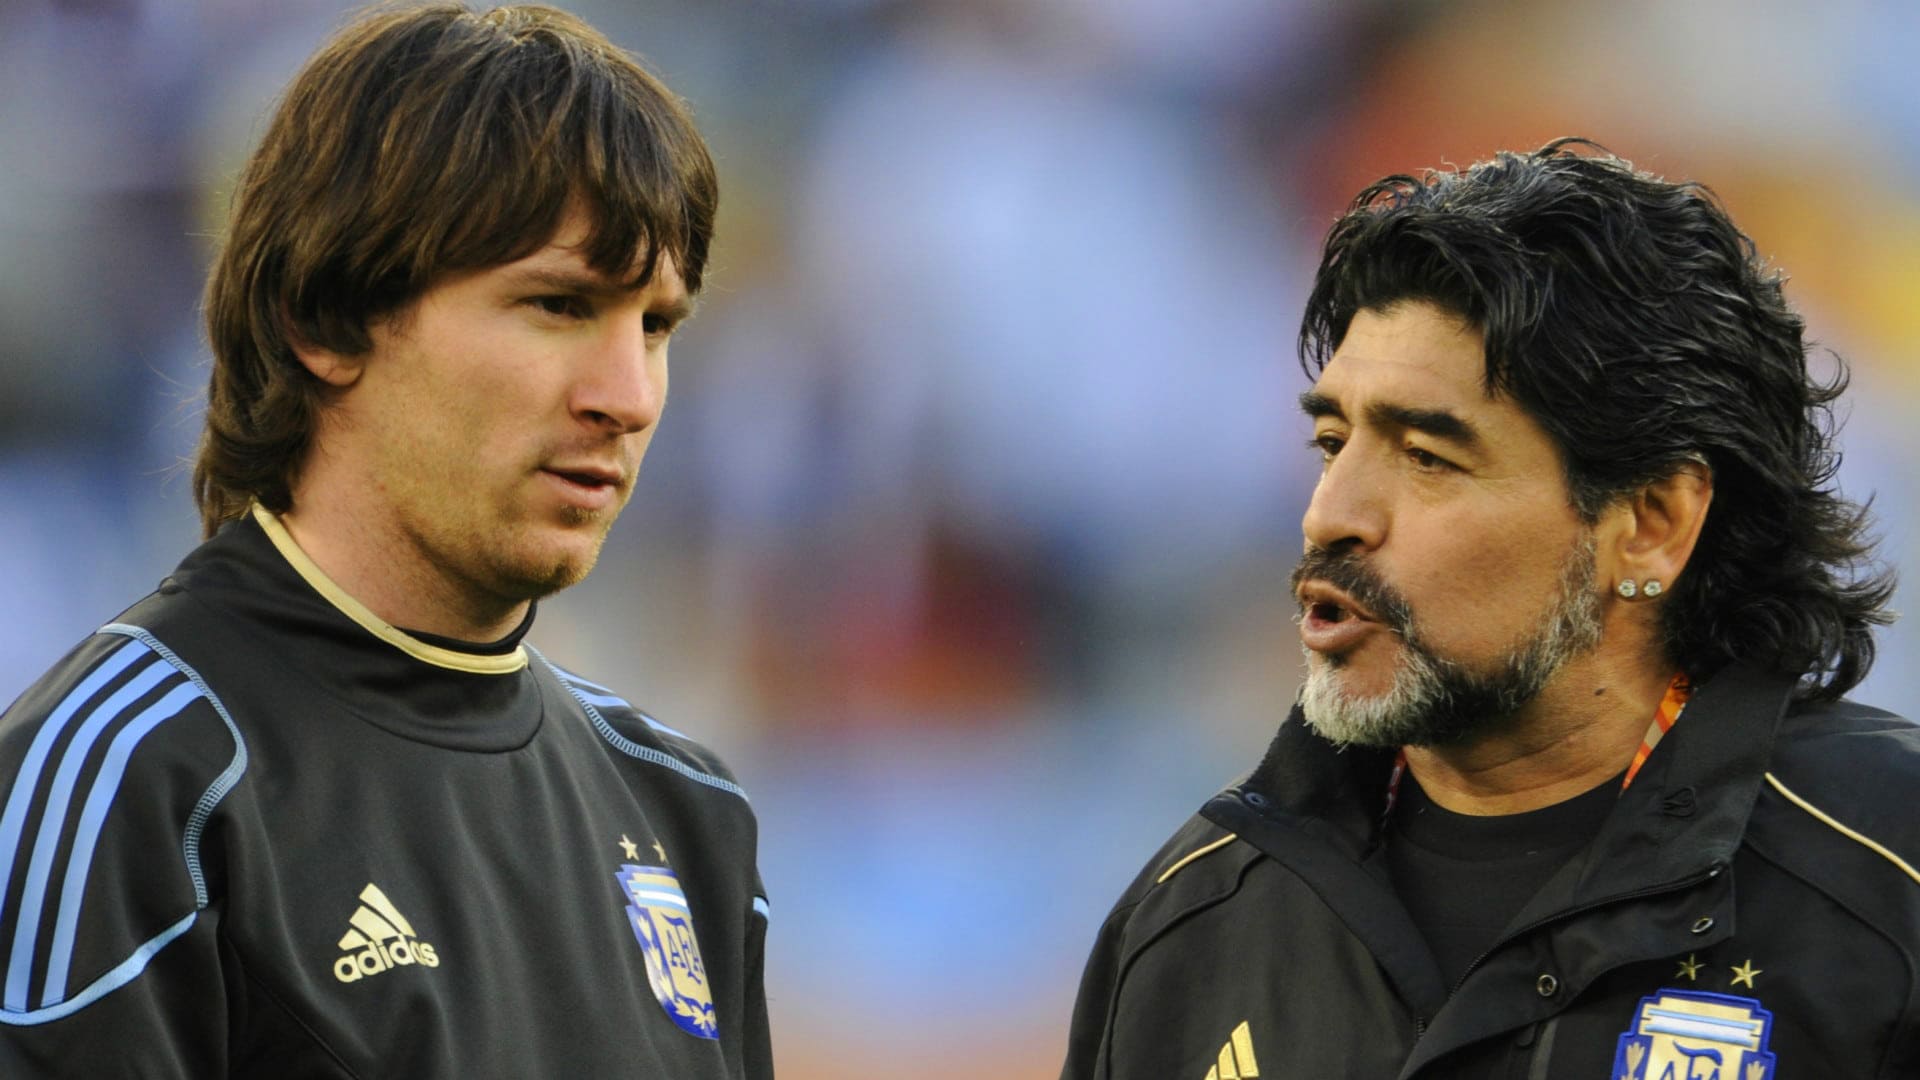 Messi and Maradona Wallpapers